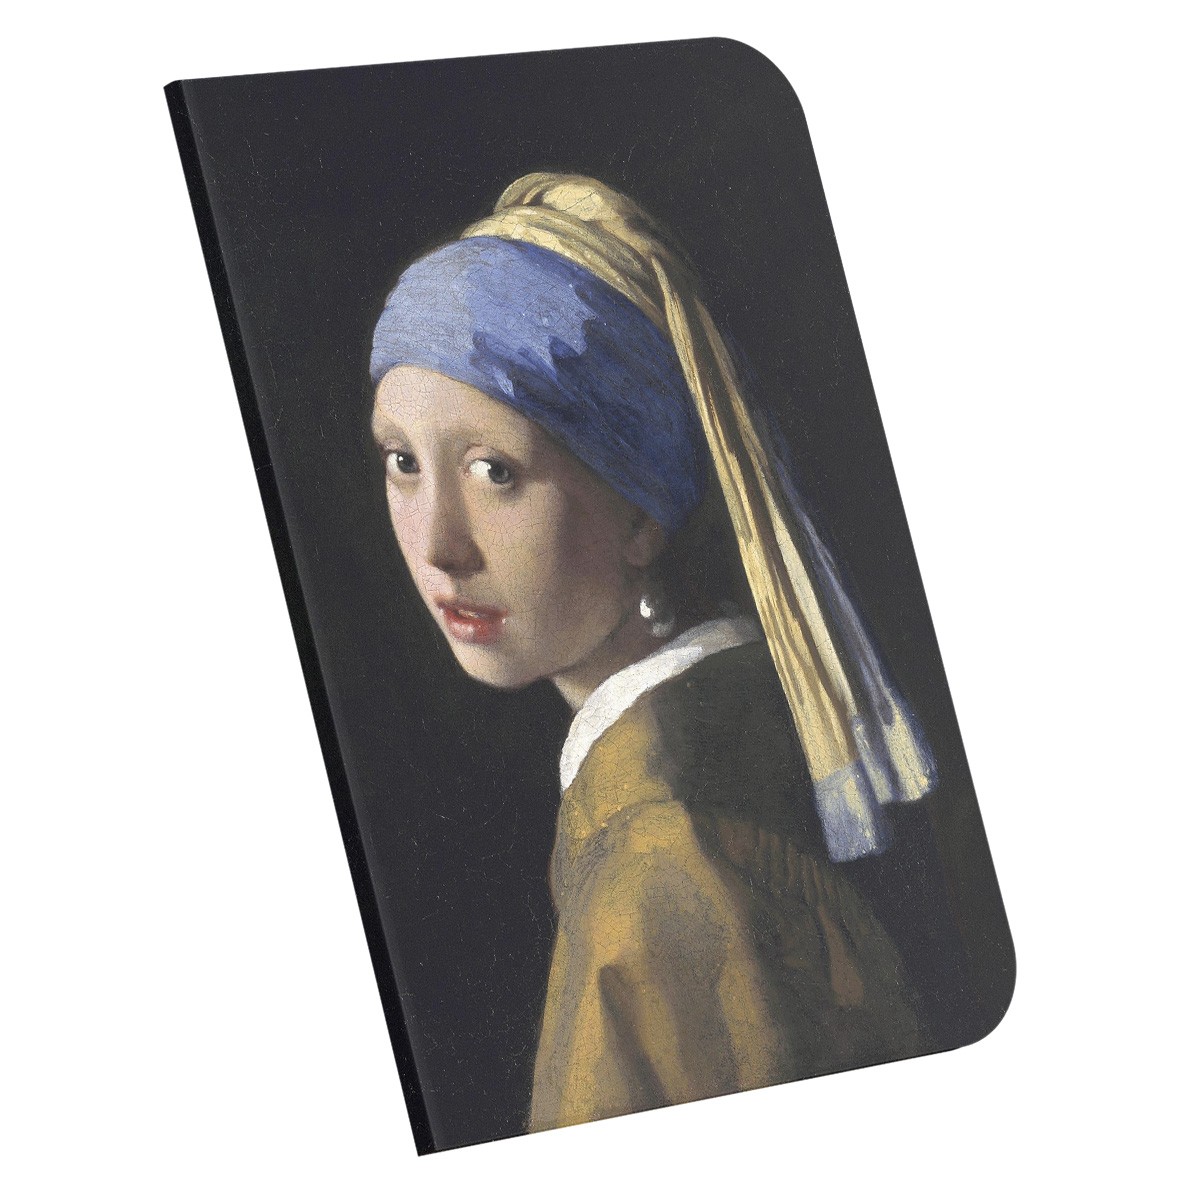 İnci Küpeli Kız / Johannes Vermeer, 1665 / A4 Defter -9